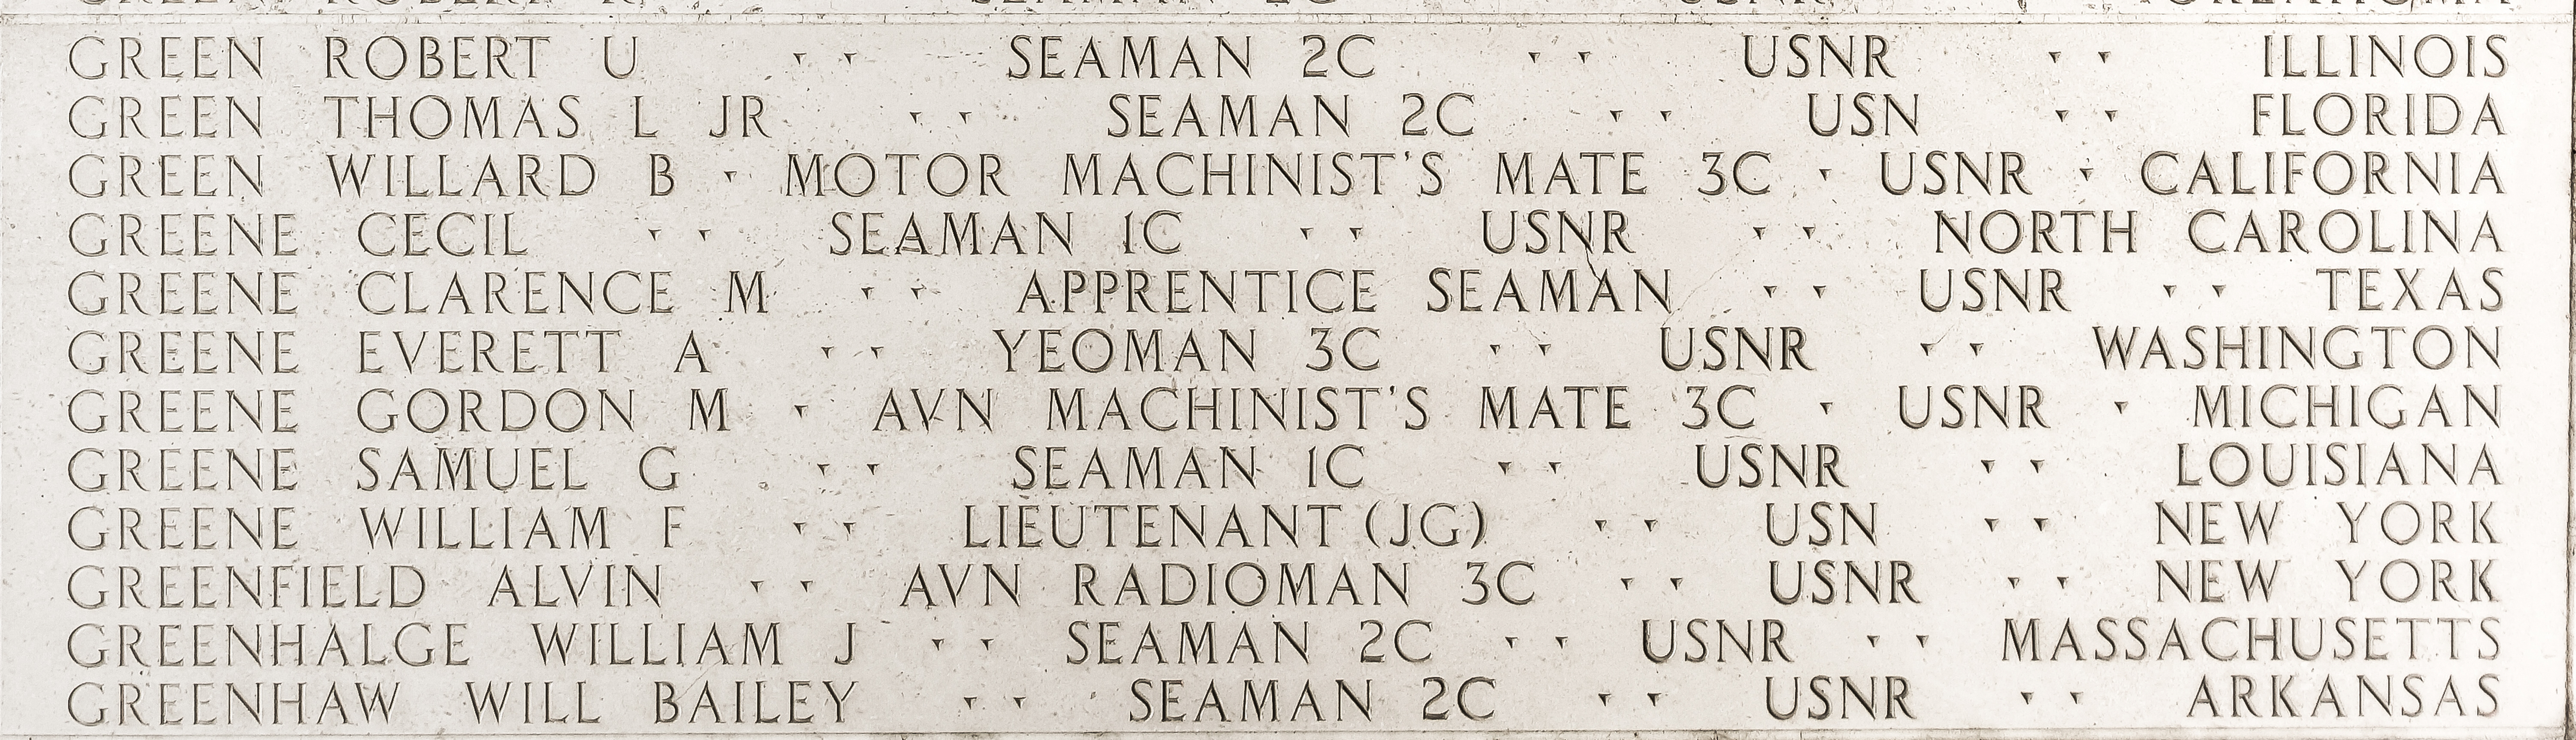 Clarence M. Greene, Apprentice Seaman